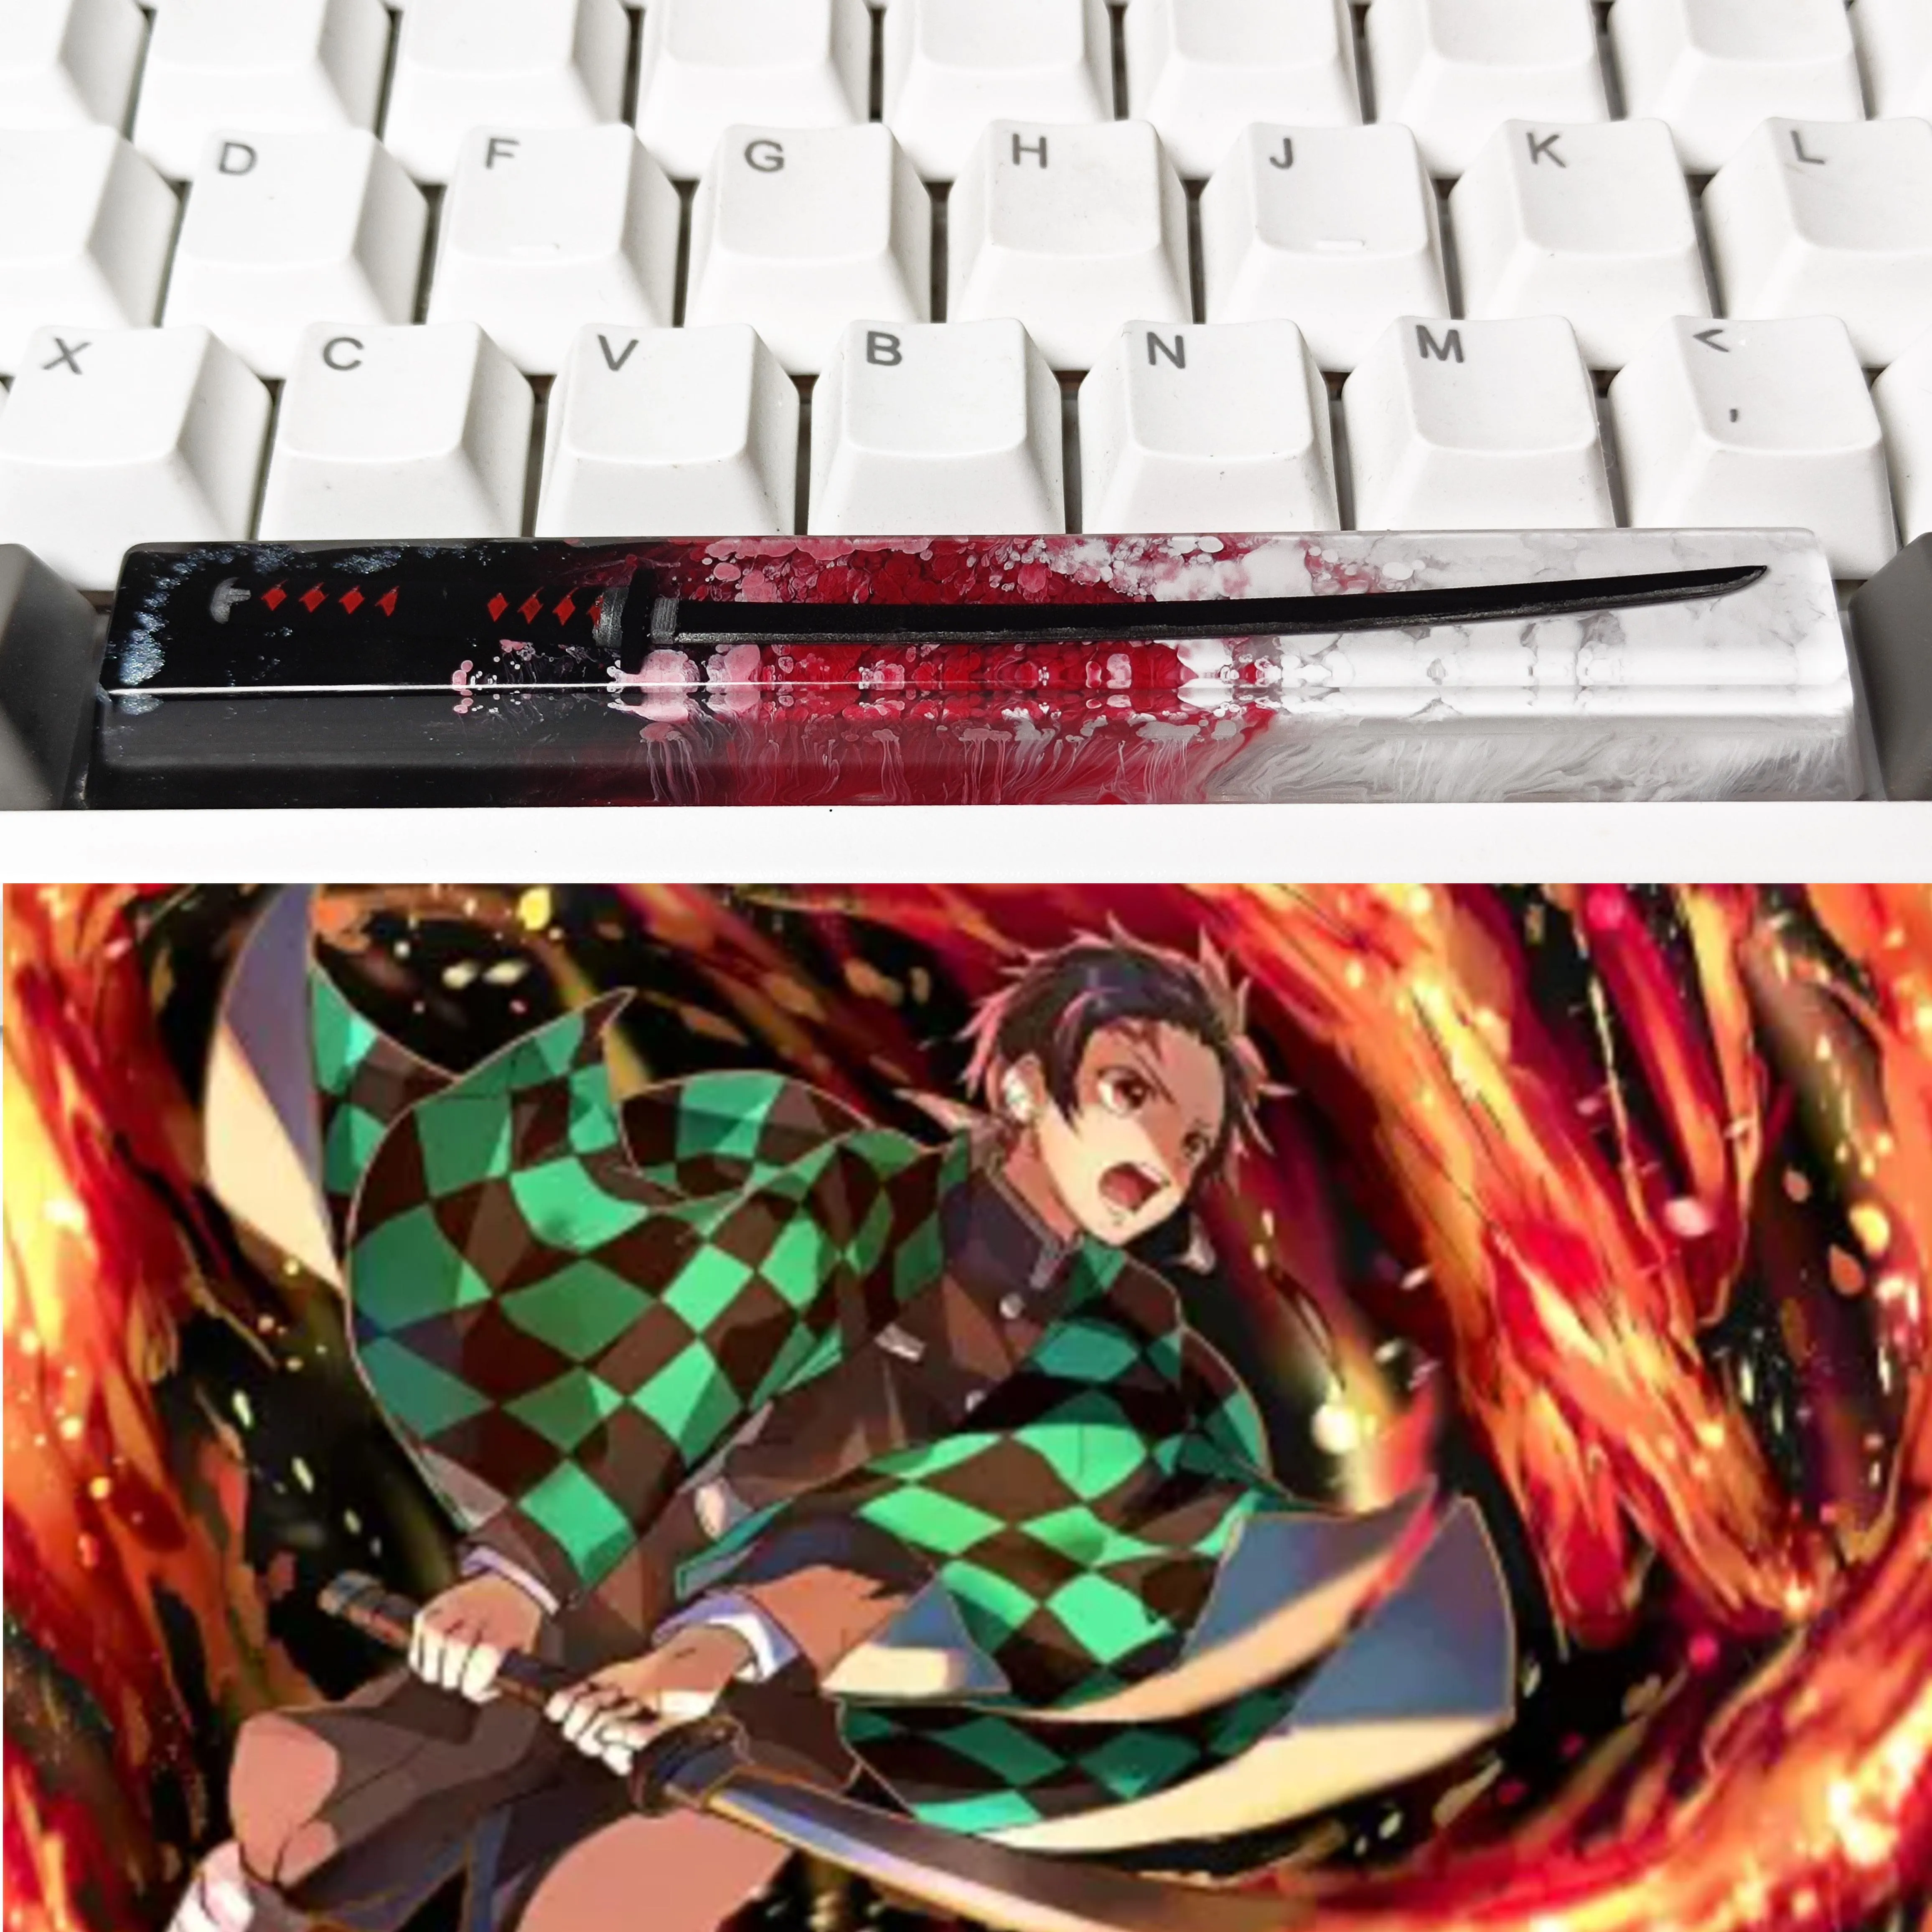 Tillbehör Personlig 6.25x hart KeyCap Anime Sword Space Bar Cherry Outline Game för Cherry MX Switch Mechanical Gaming Keyboard KeyCap